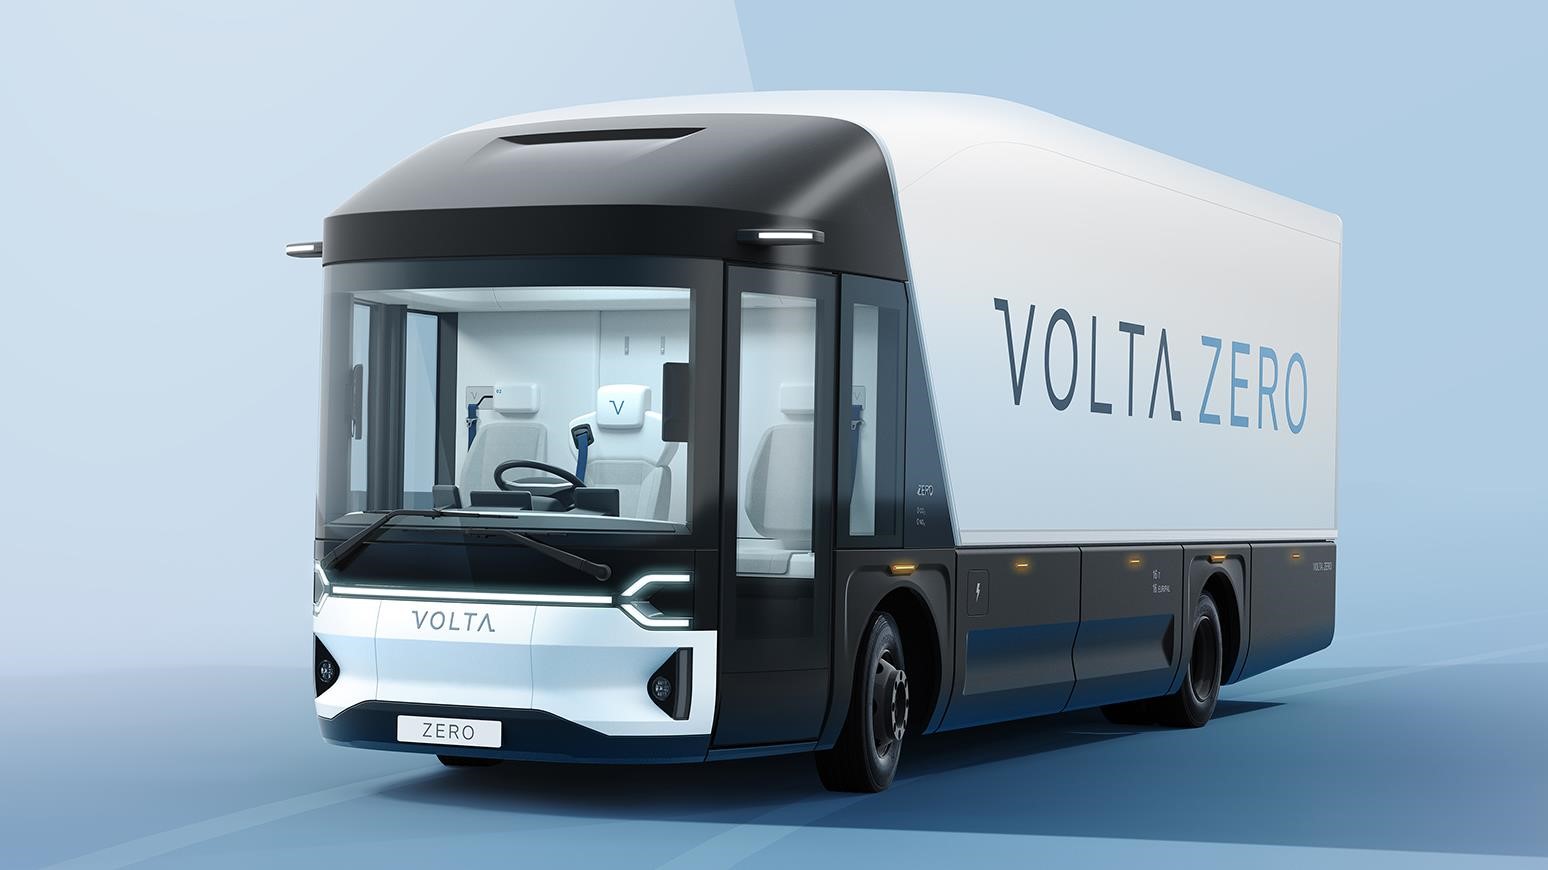 Astheimer Design Assists Volta Trucks In The Design Of The All-Electric, Zero-Emission Volta Zero